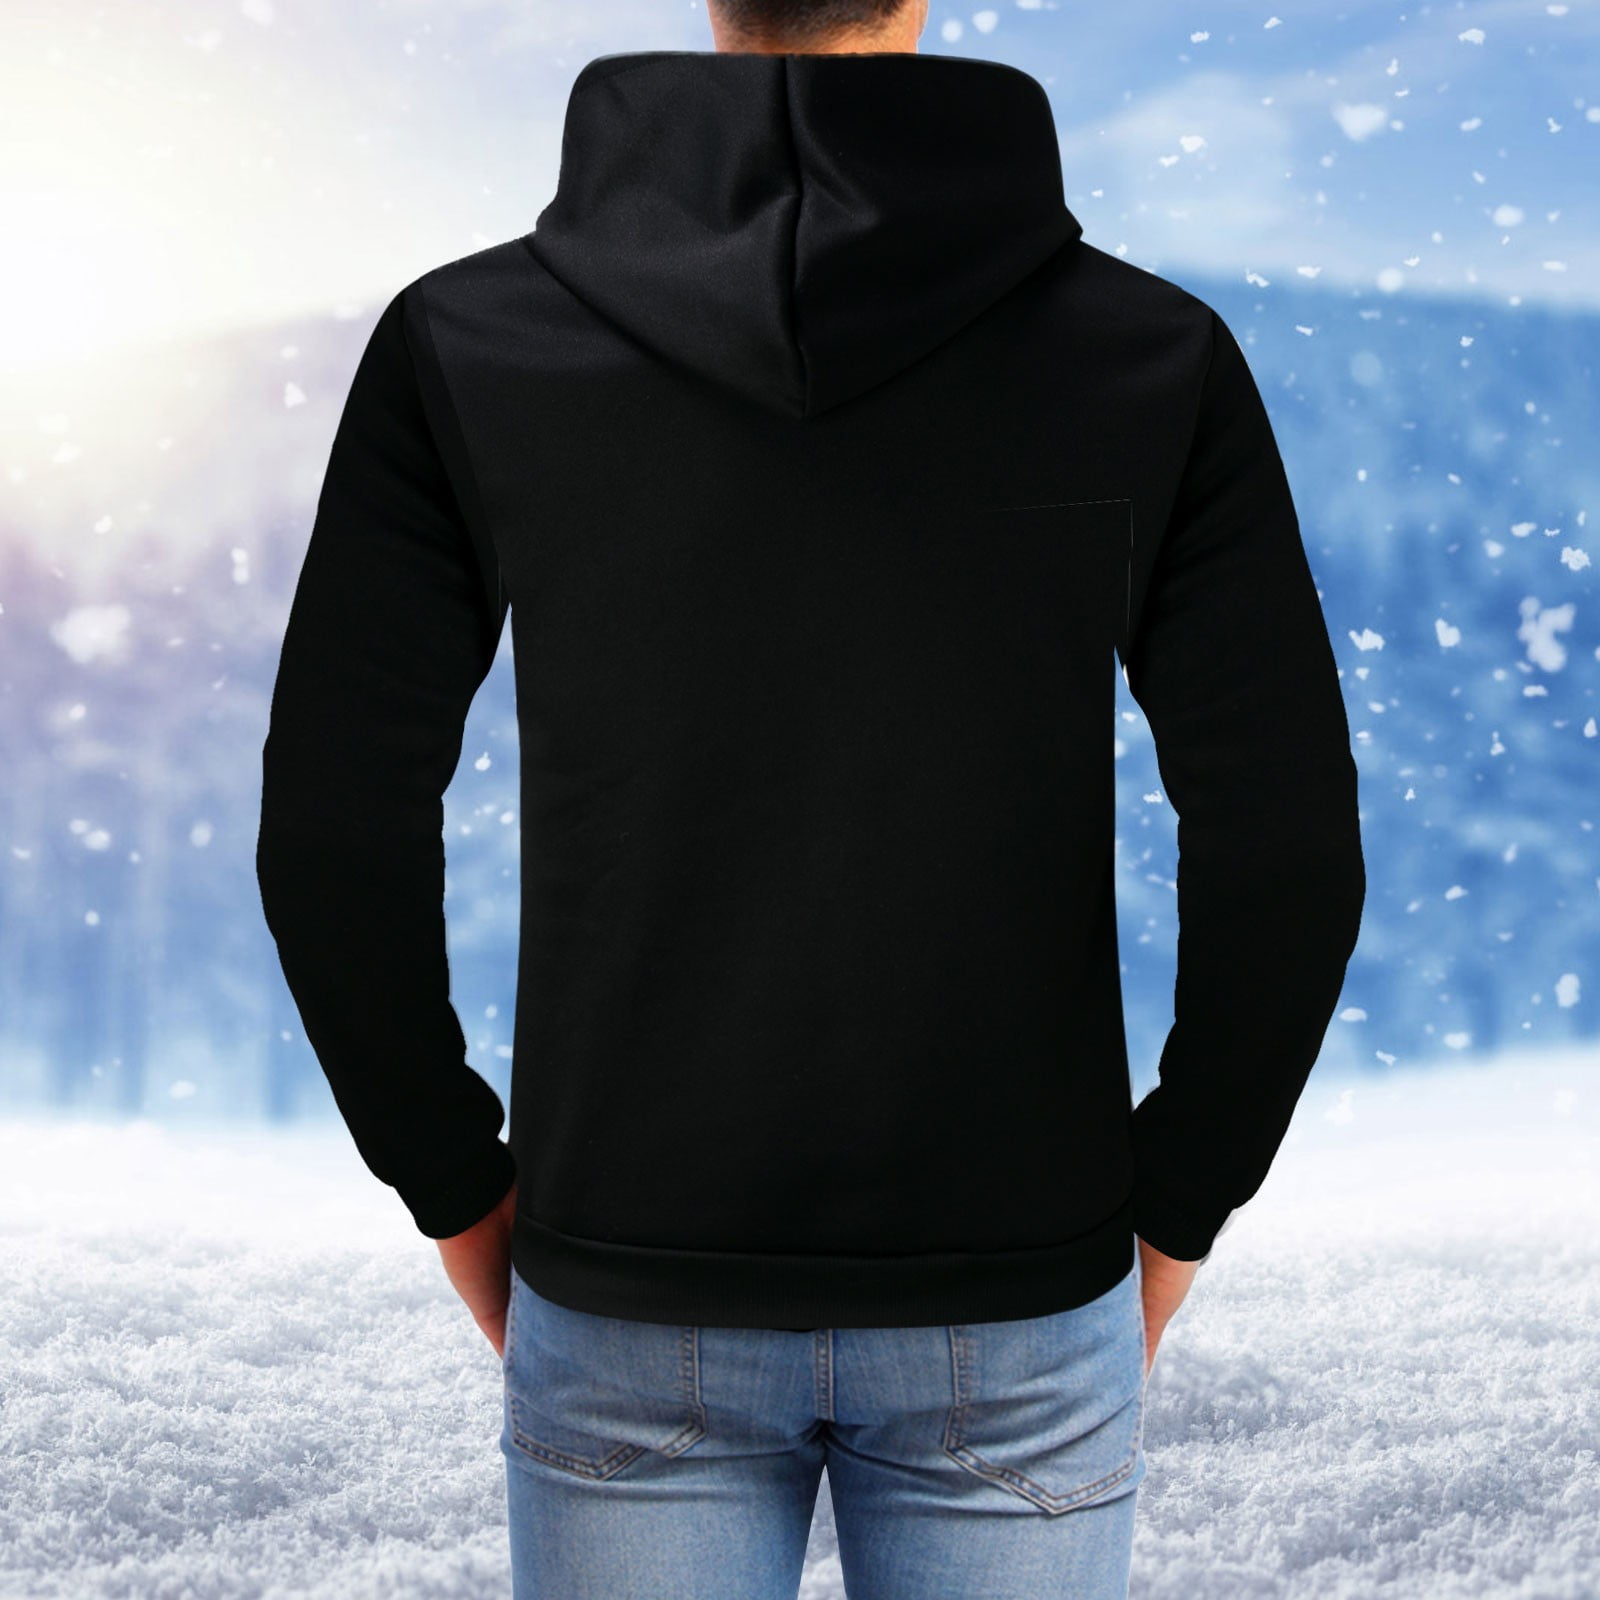 LEEy-world Hoodies For Men Men's Hoodies Fully Sherpa Lined Zip Up  Sweatshirts Heavy Thick Jacket Warm Winter Workout Pullover Black,XXL 